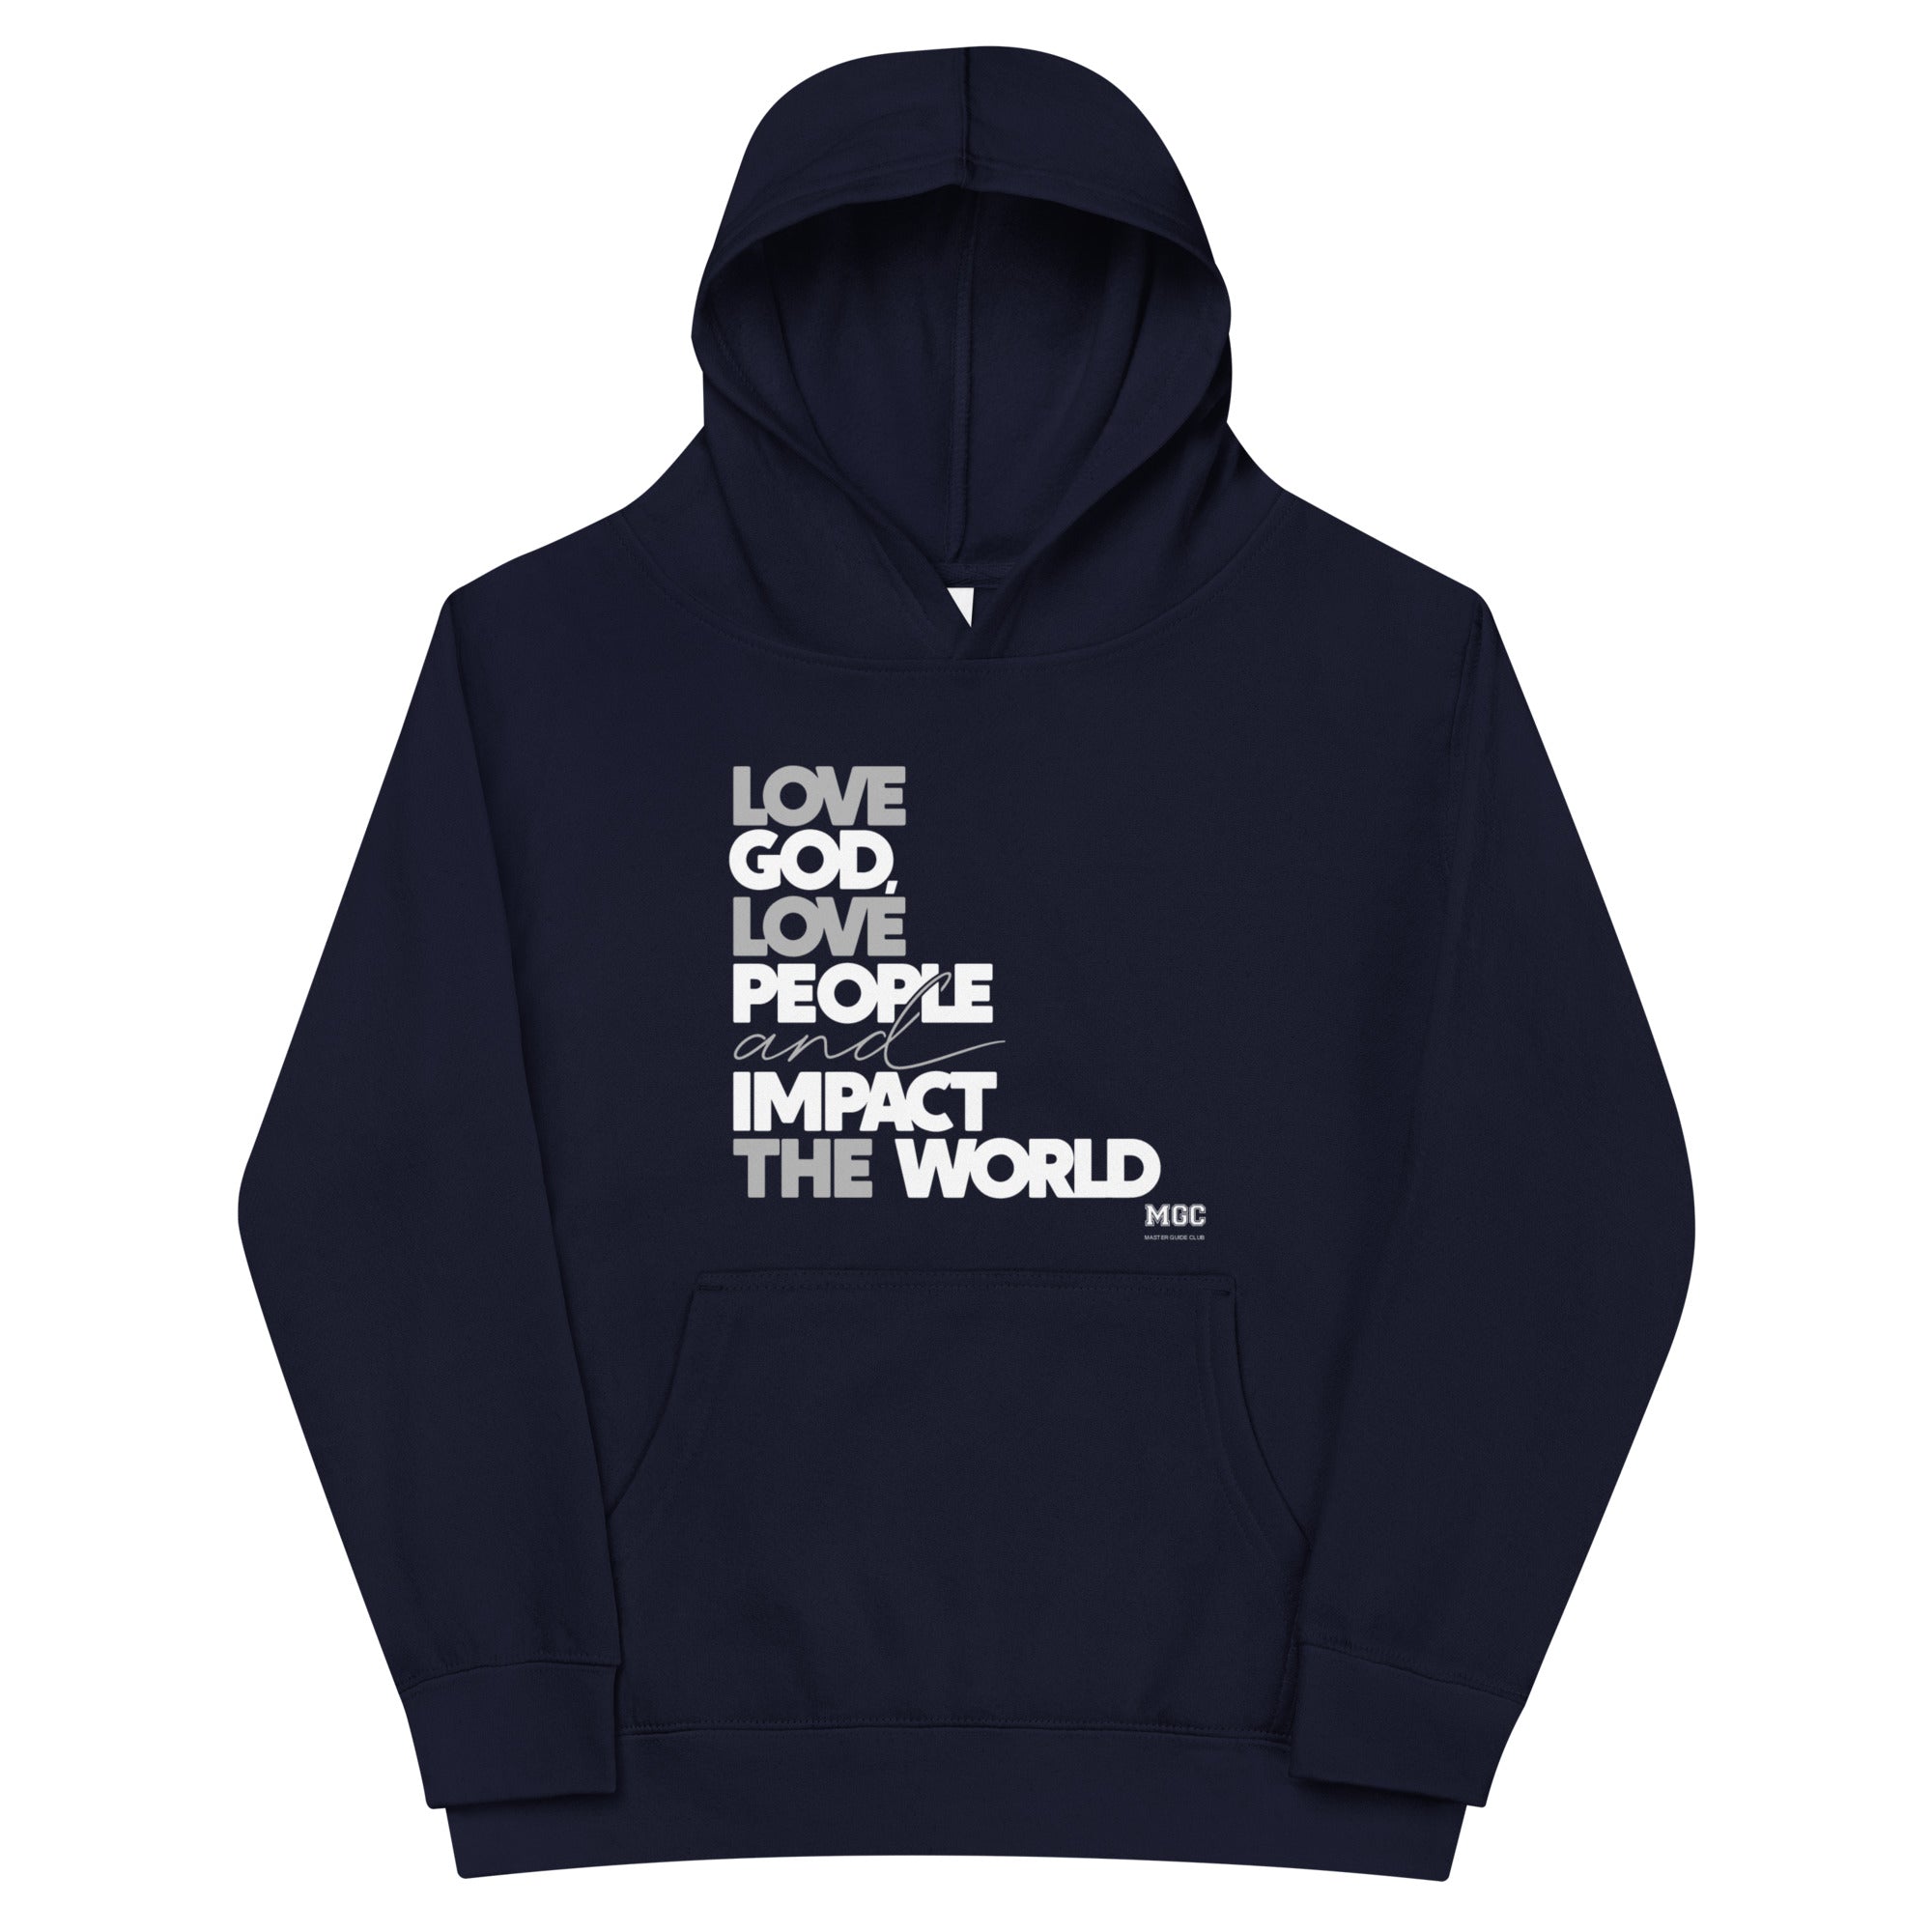 MGC Kids fleece hoodie LGLP & ITW